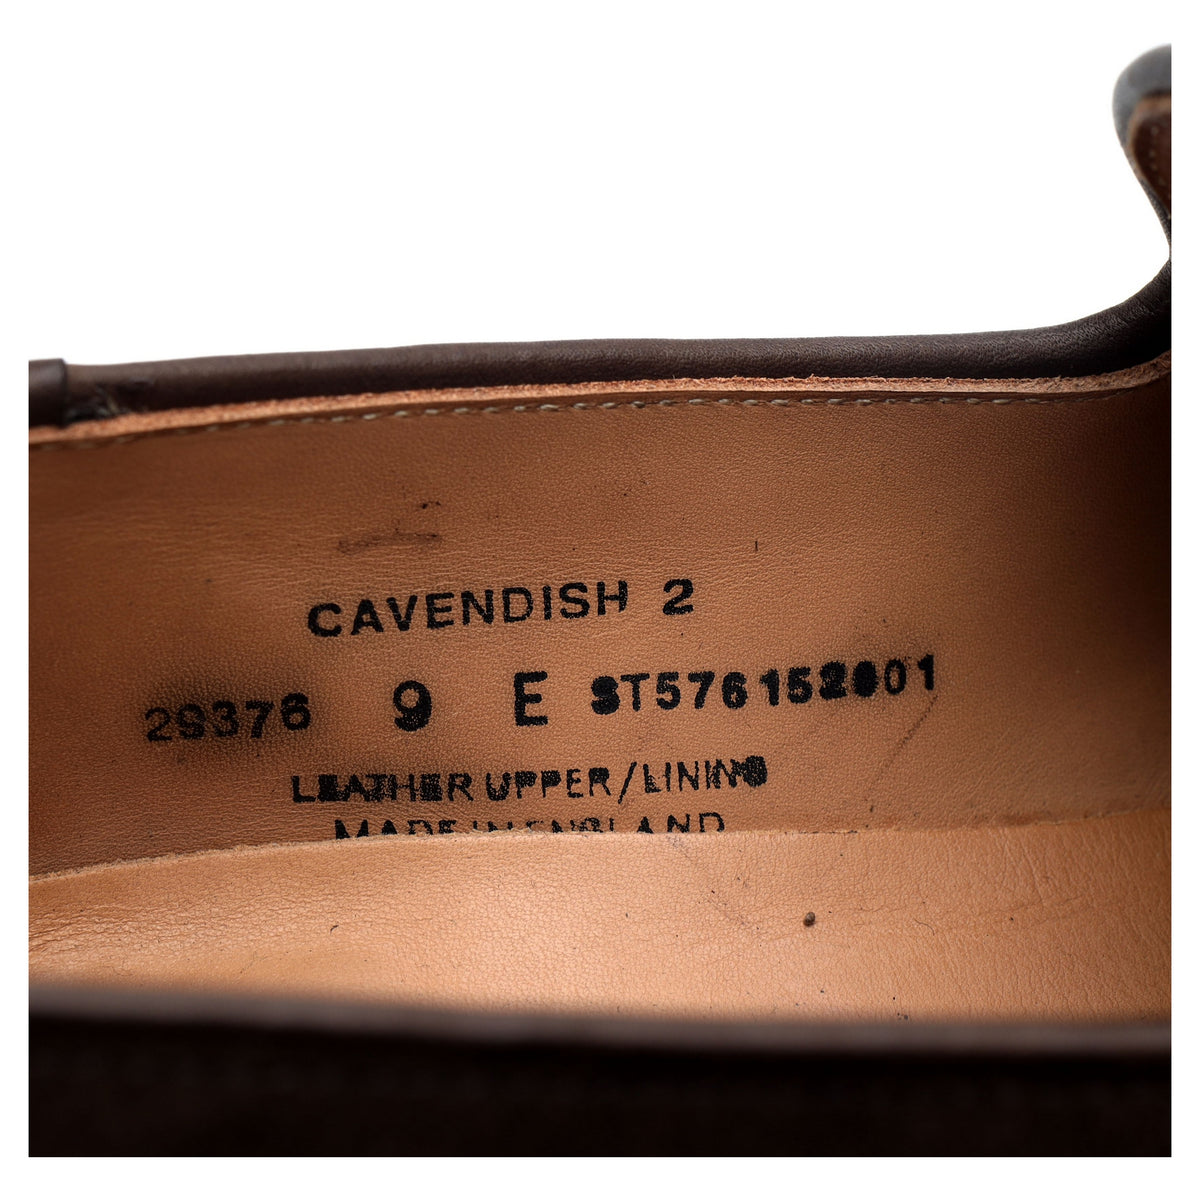 &#39;Cavendish 2&#39; Dark Brown Suede Tassel Loafers UK 9 E